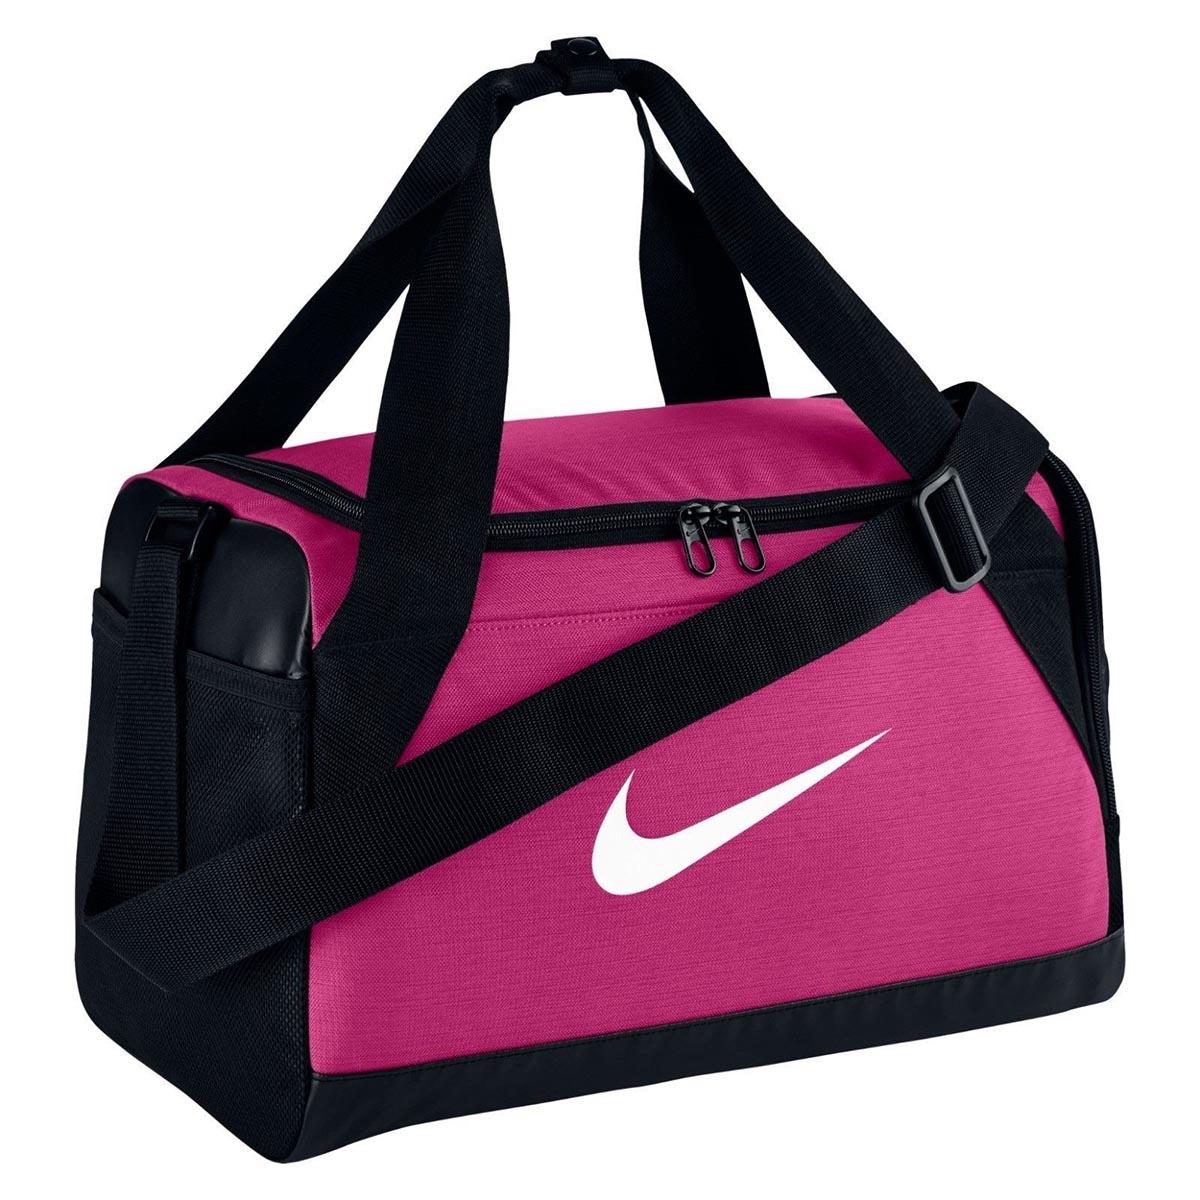 Buy Nike Brasilia XS Duffle Bag (Pink/Black) Online at Lowest